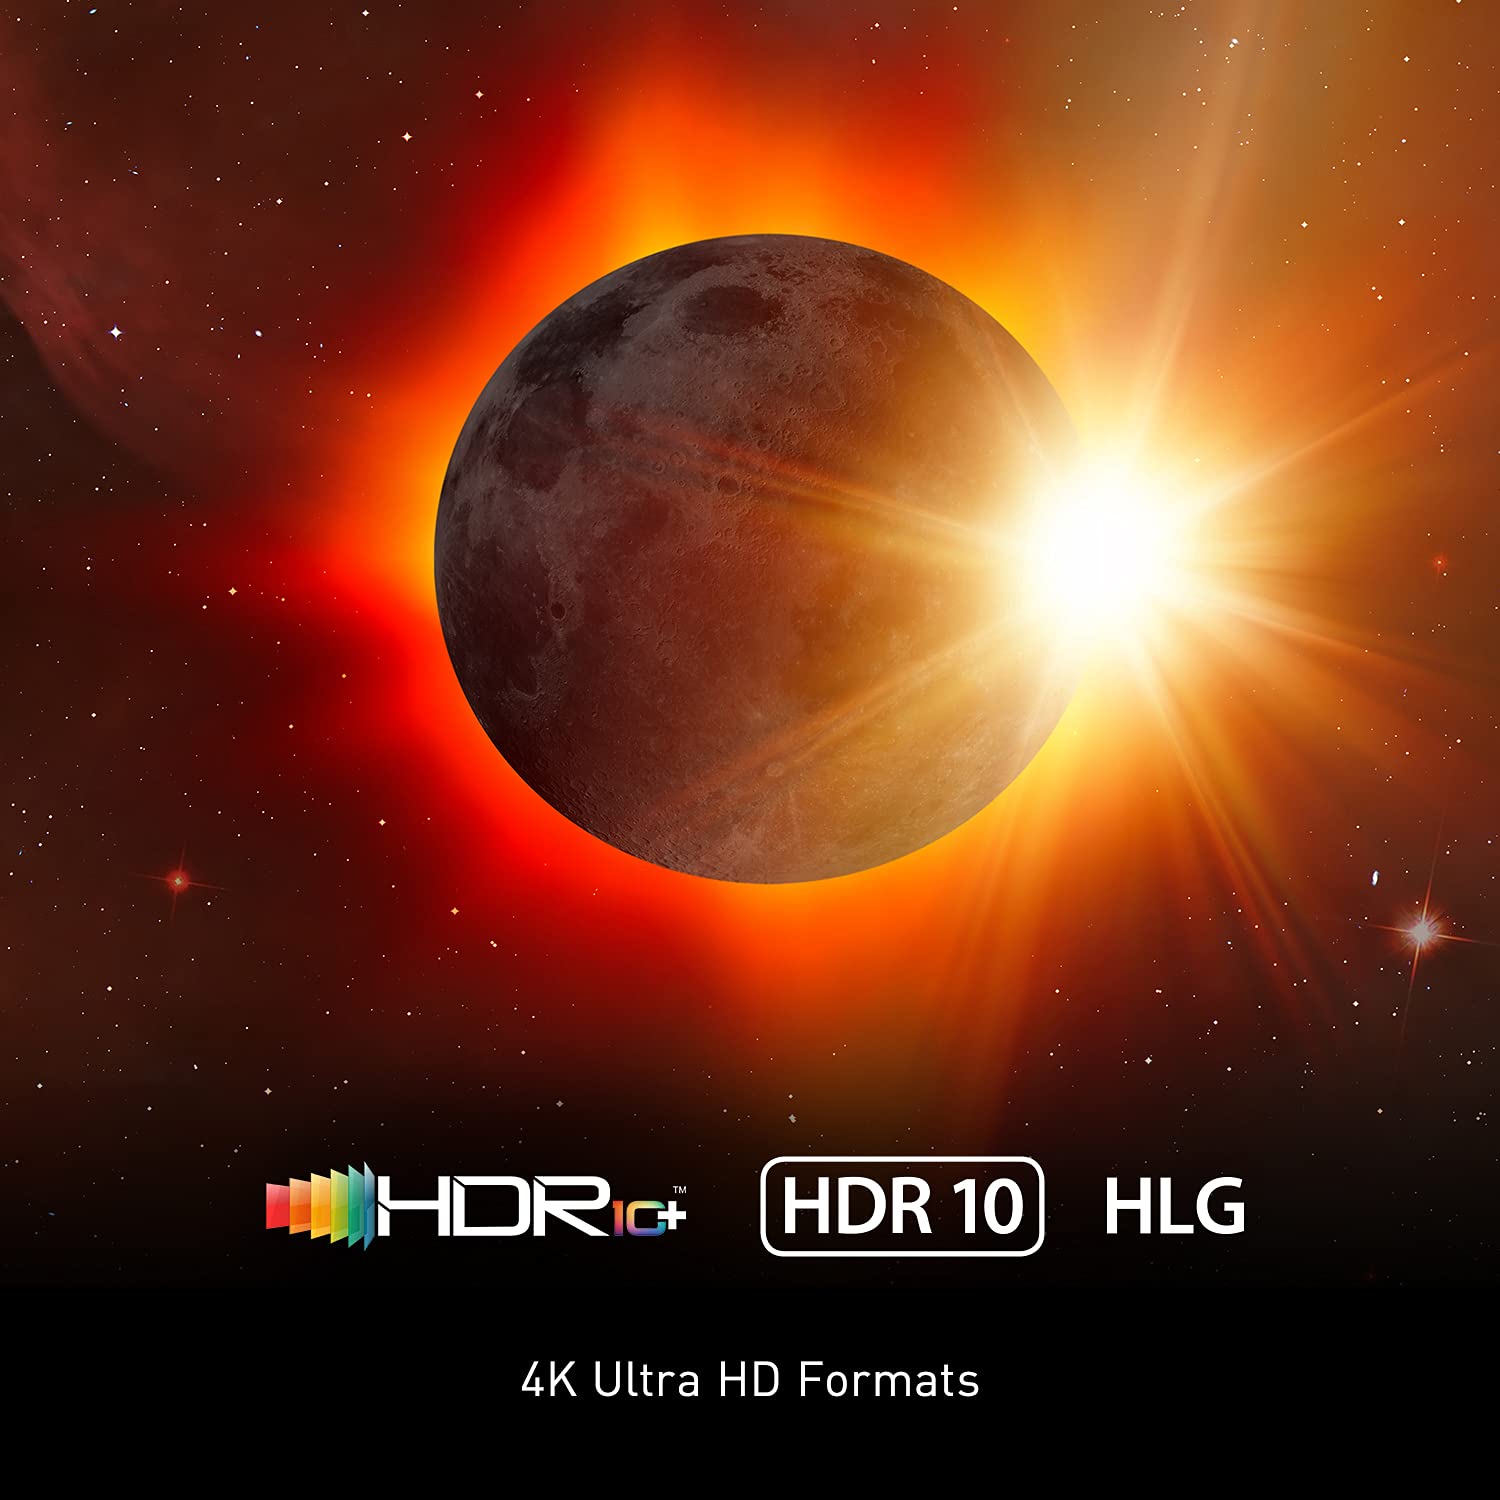 Panasonic Streaming 4K Blu Ray Player, Ultra HD Premium Video Playback with Hi-Res Audio, Voice Assist - DP-UB420-K (Black)